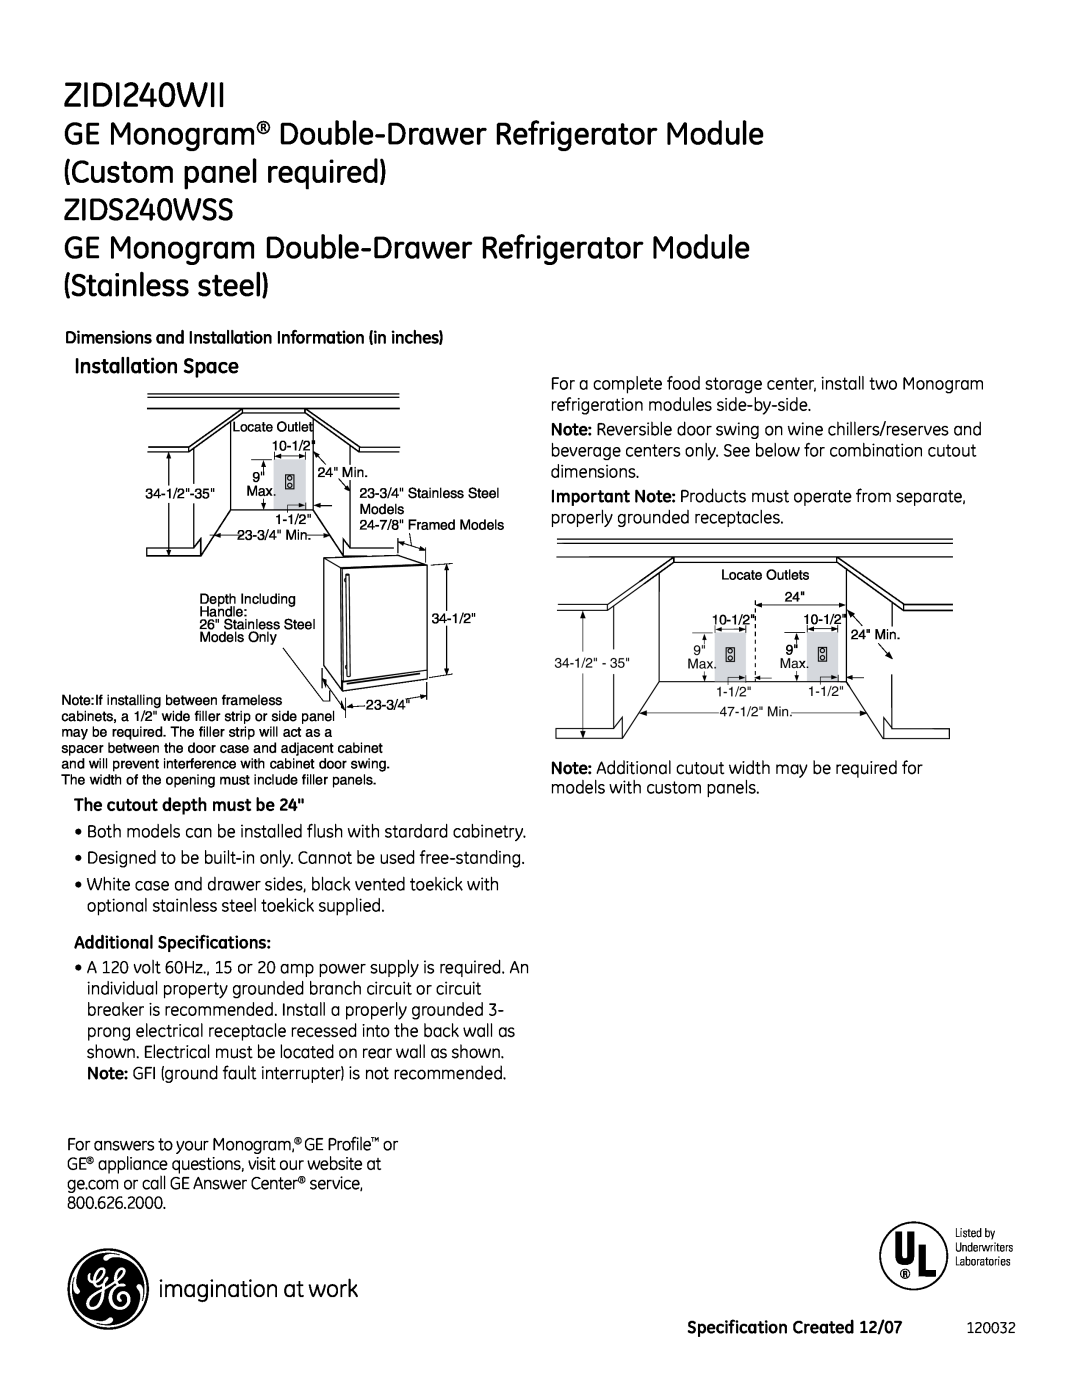 GE Monogram ZIDI240WII dimensions GE Monogram Double-Drawer Refrigerator Module Custom panel required, ZIDS240WSS 